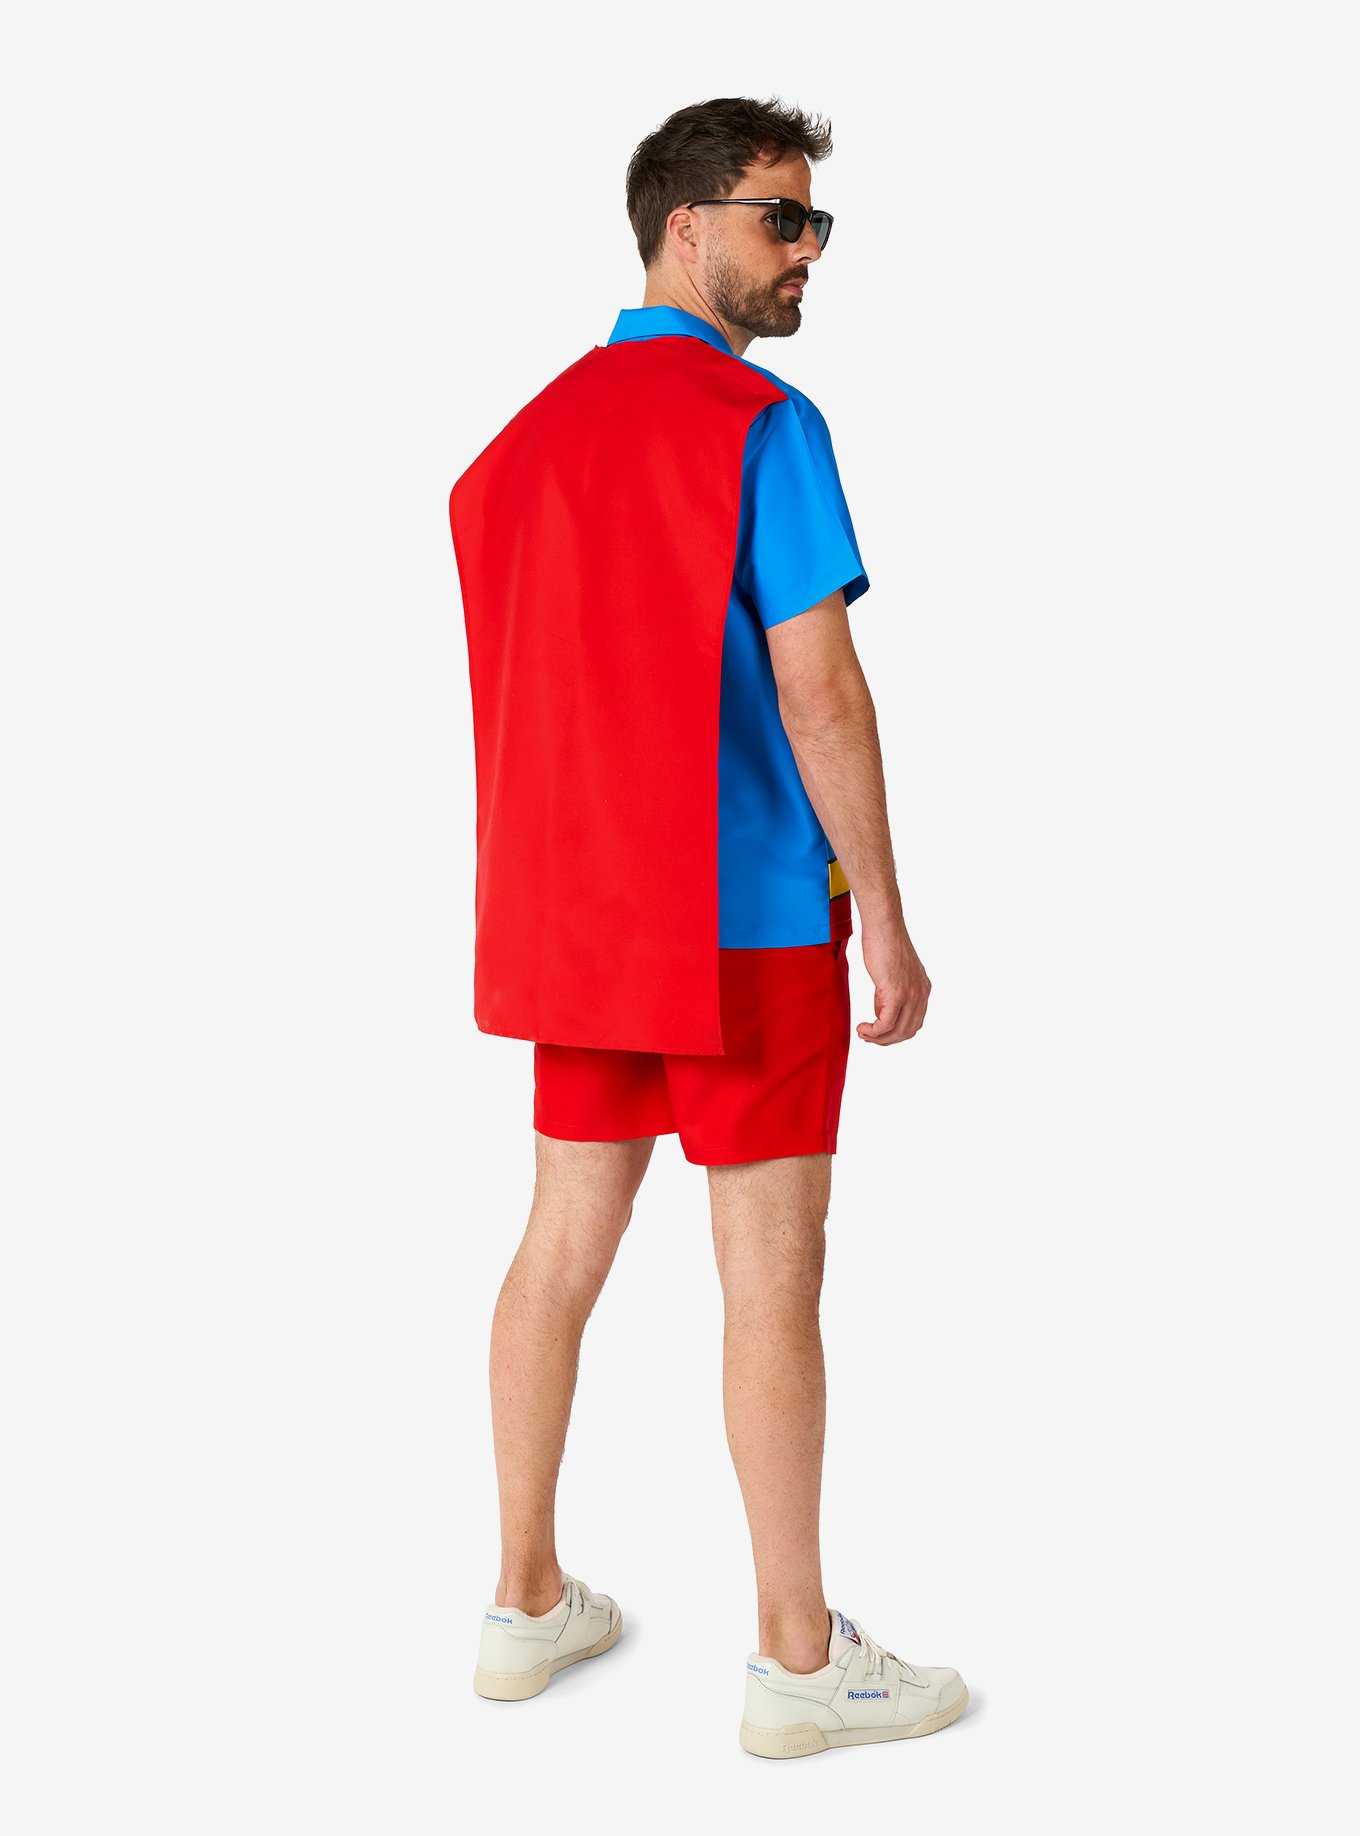 DC Comics Superman Button-Up Shirt and Short, , hi-res